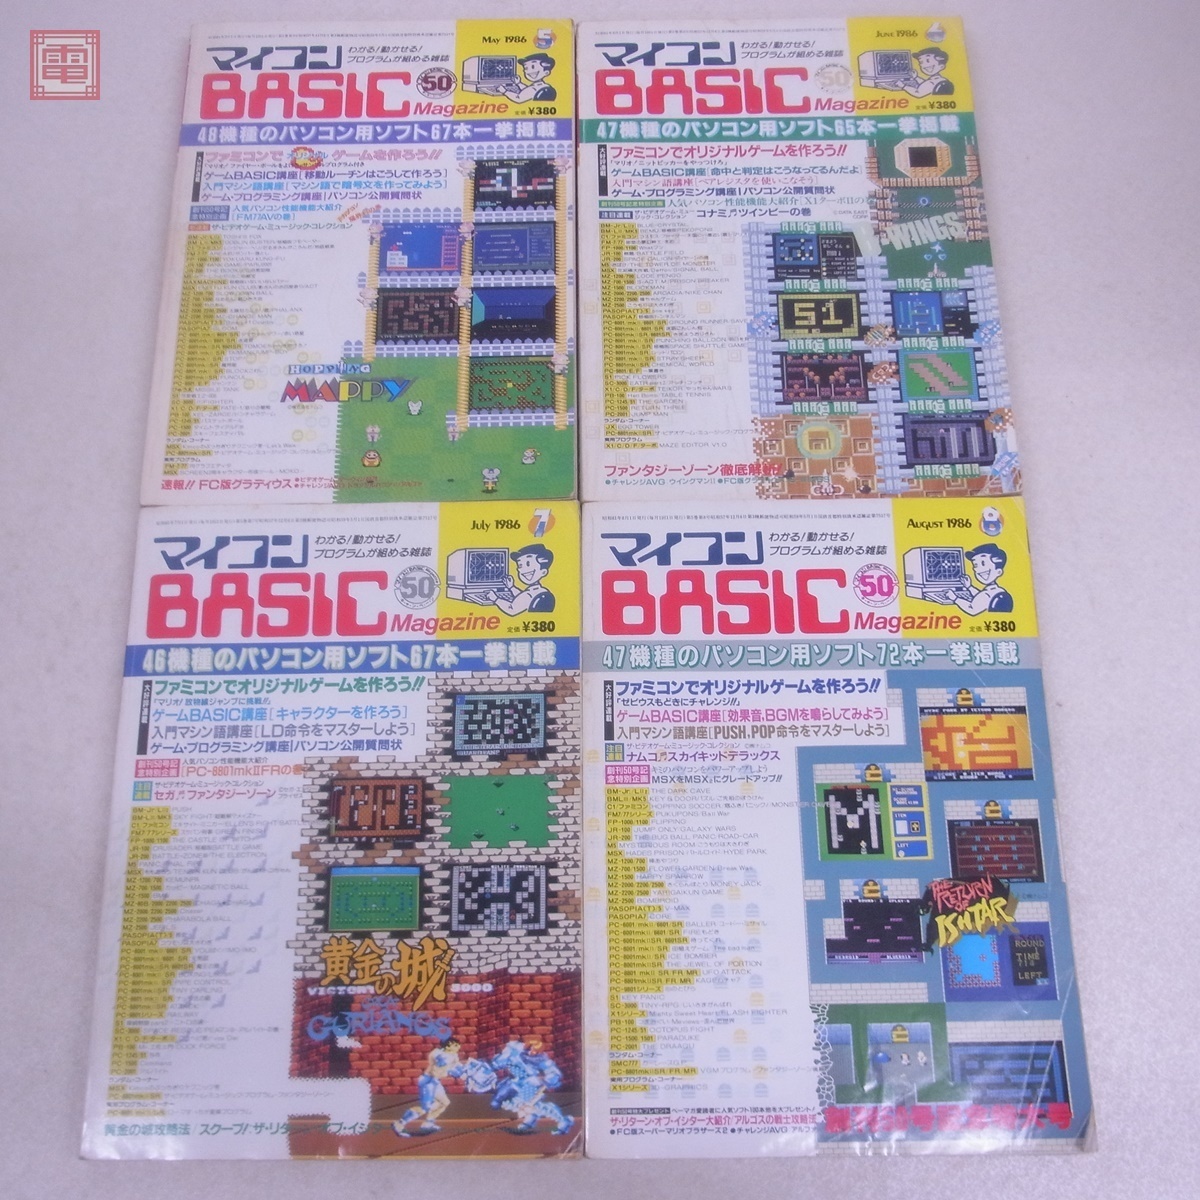  журнал microcomputer BASIC журнал 1986 год Showa 61 год 1 месяц номер ~12 месяц номер итого 12 шт. через год .. беж maga радиоволны газета фирма не осмотр товар [20